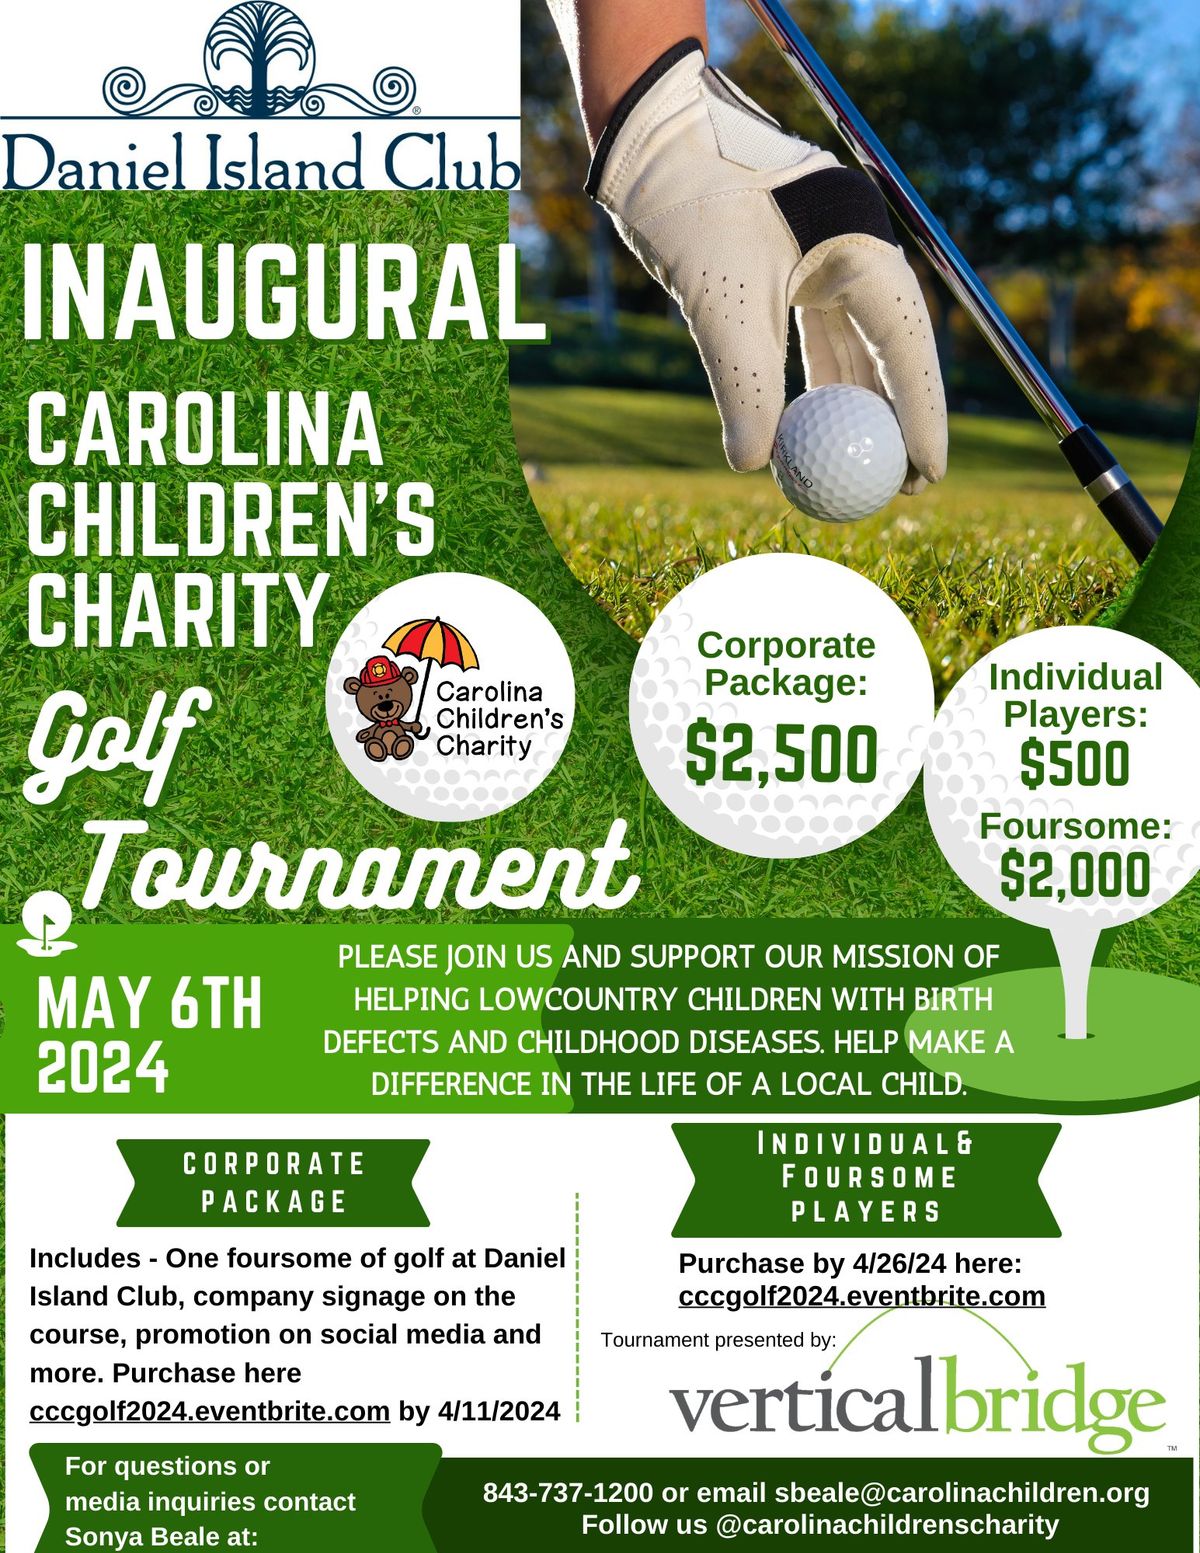 Carolina Children's Charity Inaugural Golf Tournament at Daniel Island Club